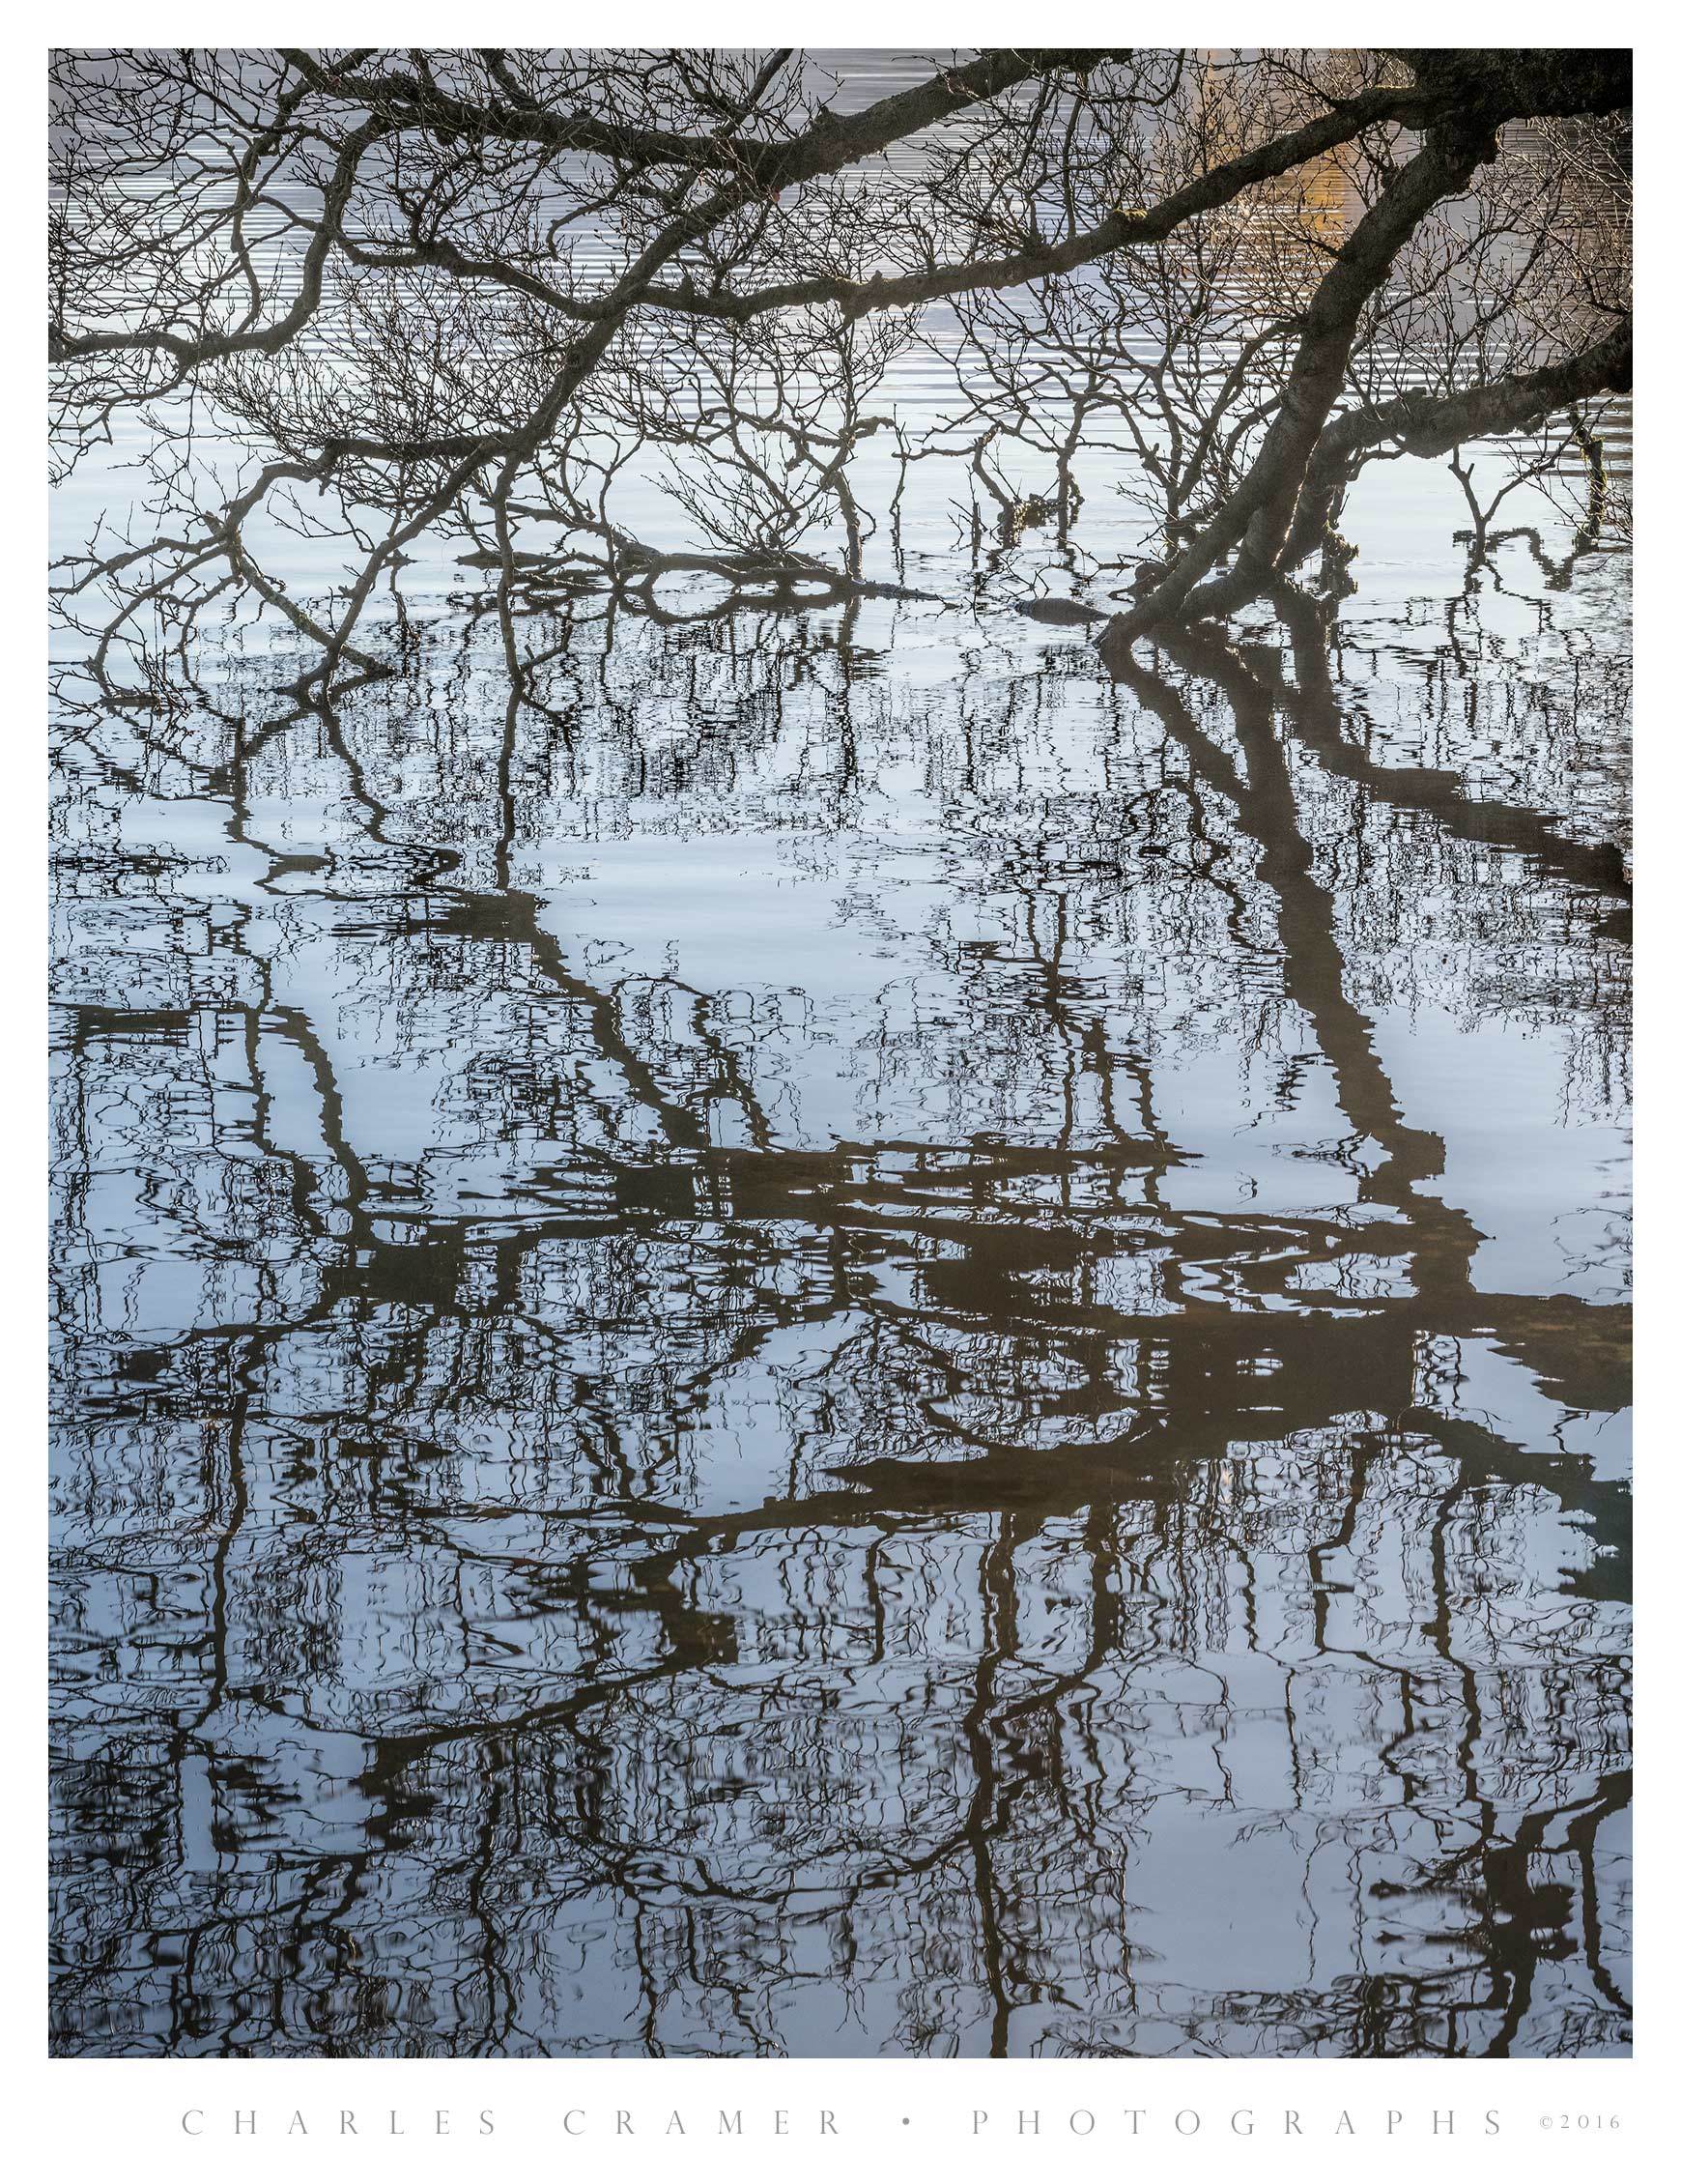 Partially Submerged Tree, Derwentwater, Lakes District, England